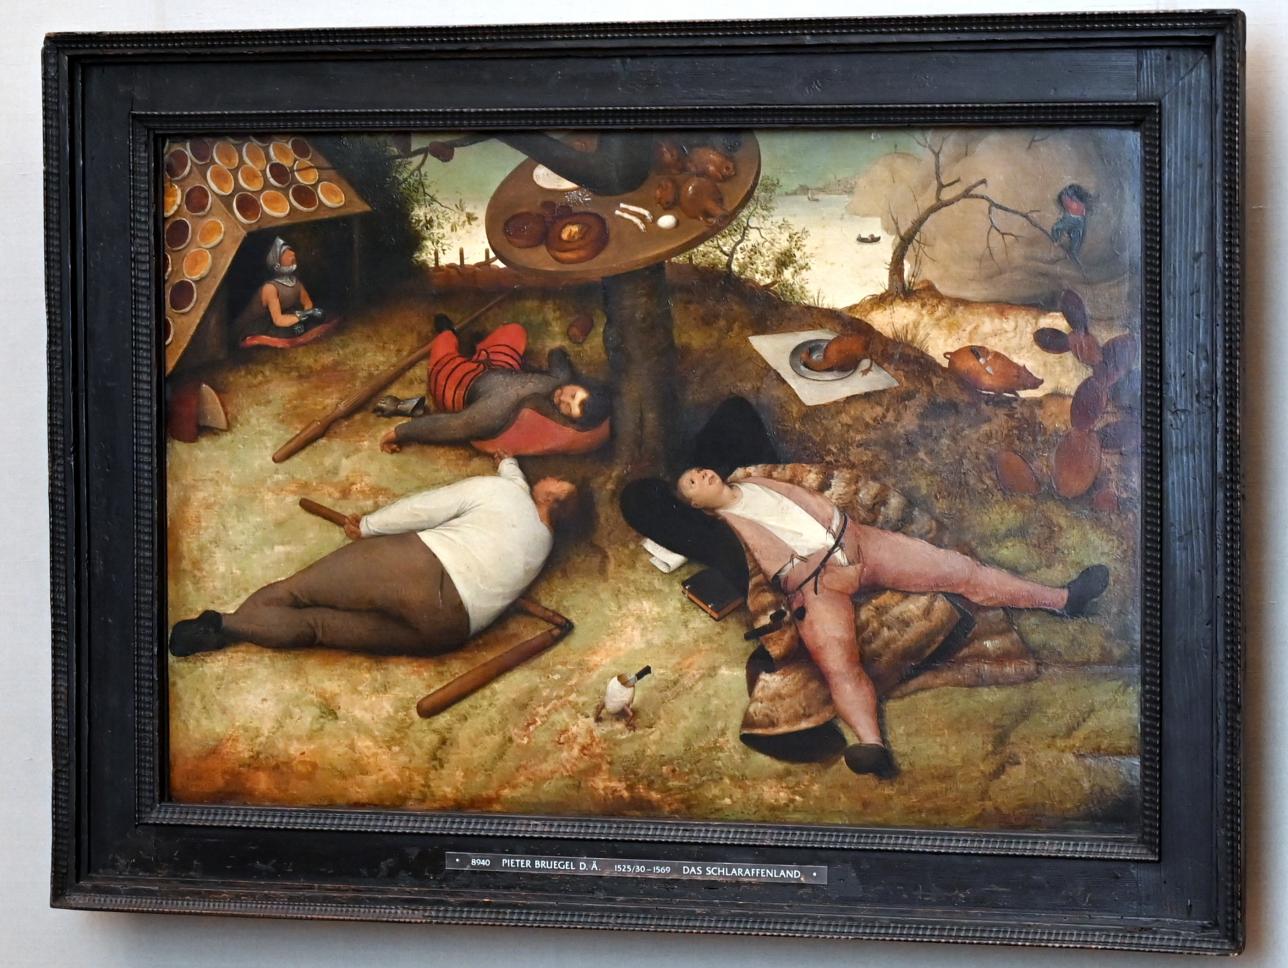 Pieter Brueghel der Ältere (Bauernbrueghel) (1559–1568), Das Schlaraffenland, München, Alte Pinakothek, Erdgeschoss Kabinett 1-3, 1567